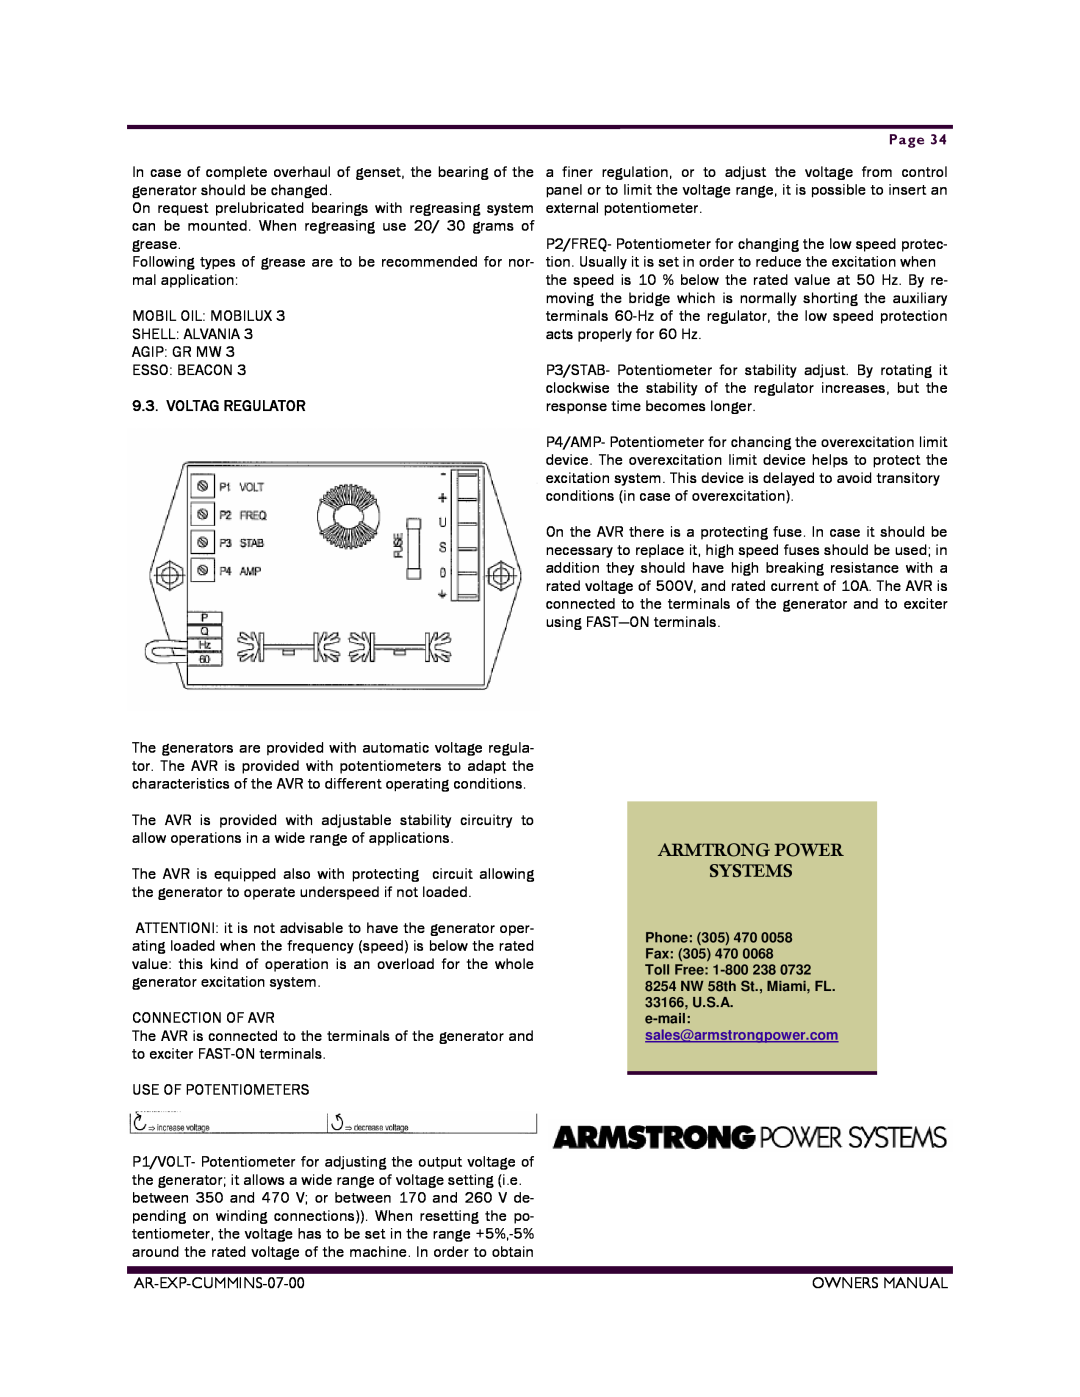 Armstrong World Industries ACUM110, ACUM84, ACUM140, ACUM185, ACUM65, ACUM210 Armtrong Power Systems, Voltag Regulator 